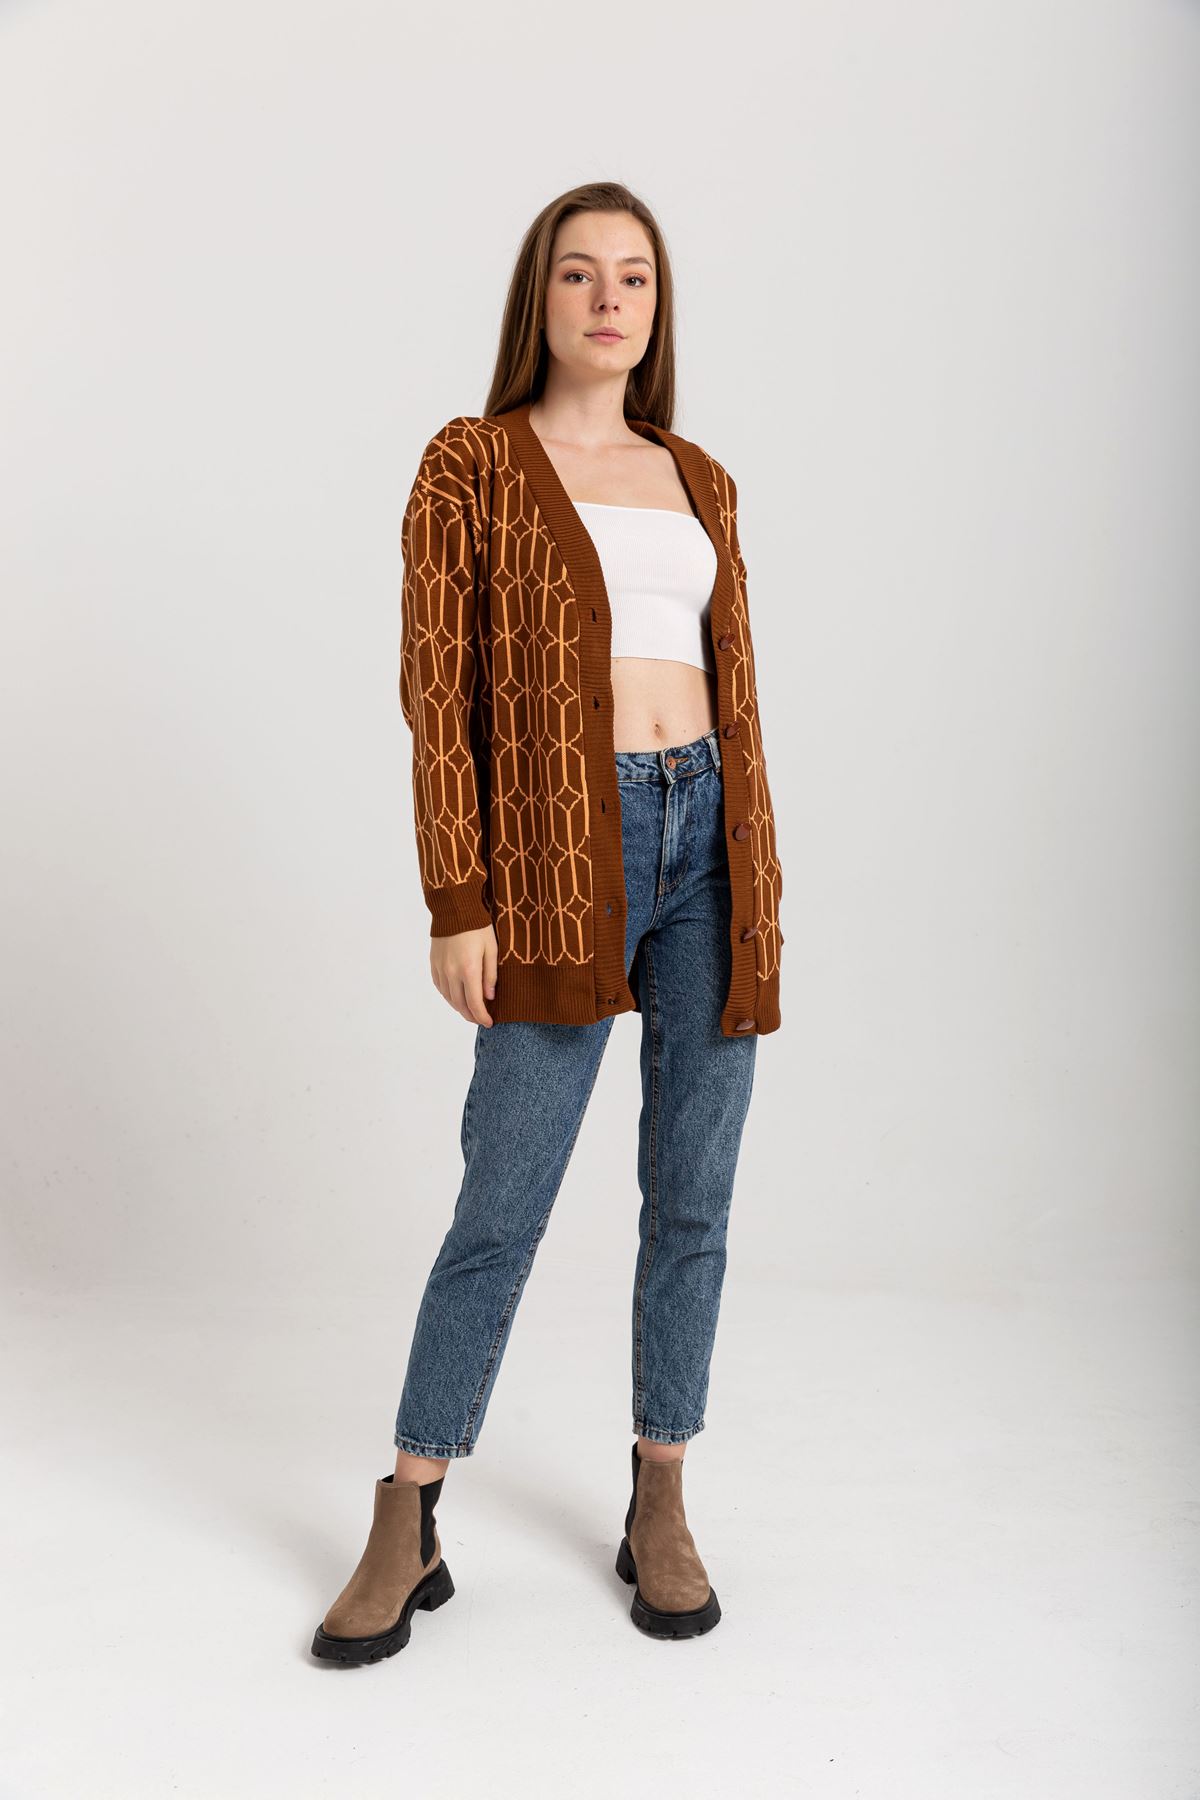 Knitwear Fabric Long Sleeve V-Neck Hip Height Geometric Print Women Cardigan - Light Brown